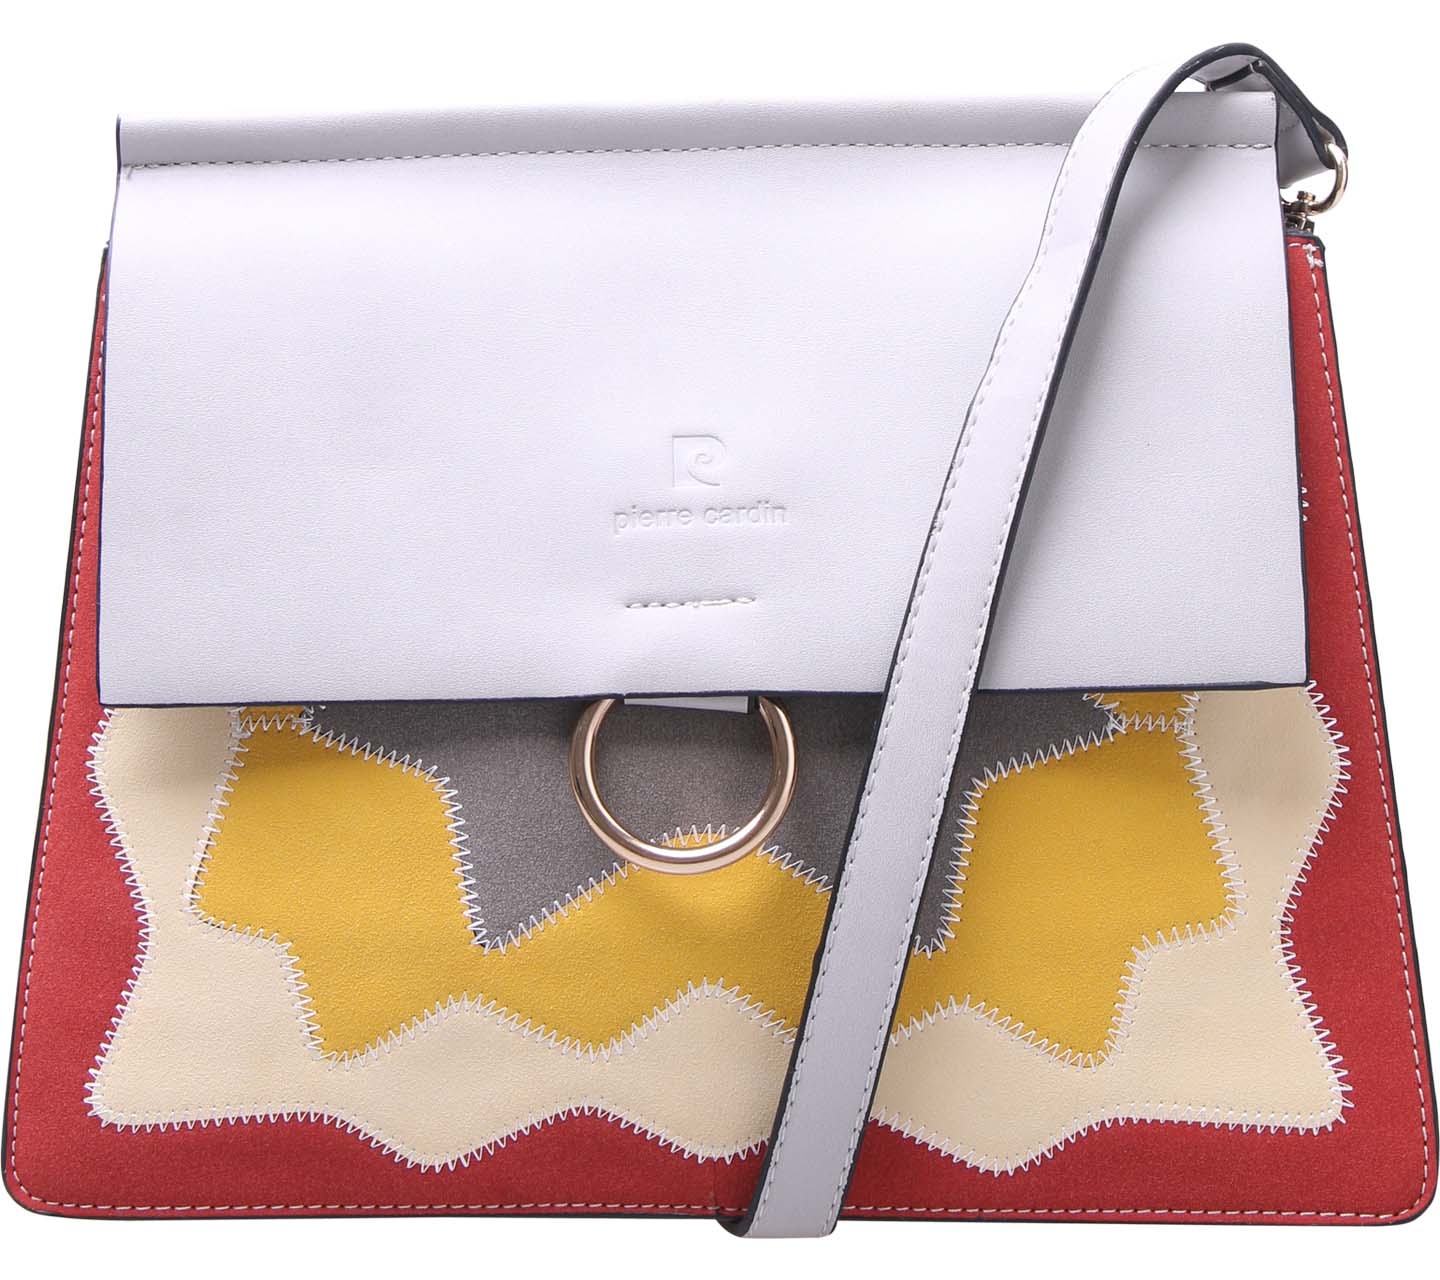 Pierre Cardin Multicolor Sling Bag